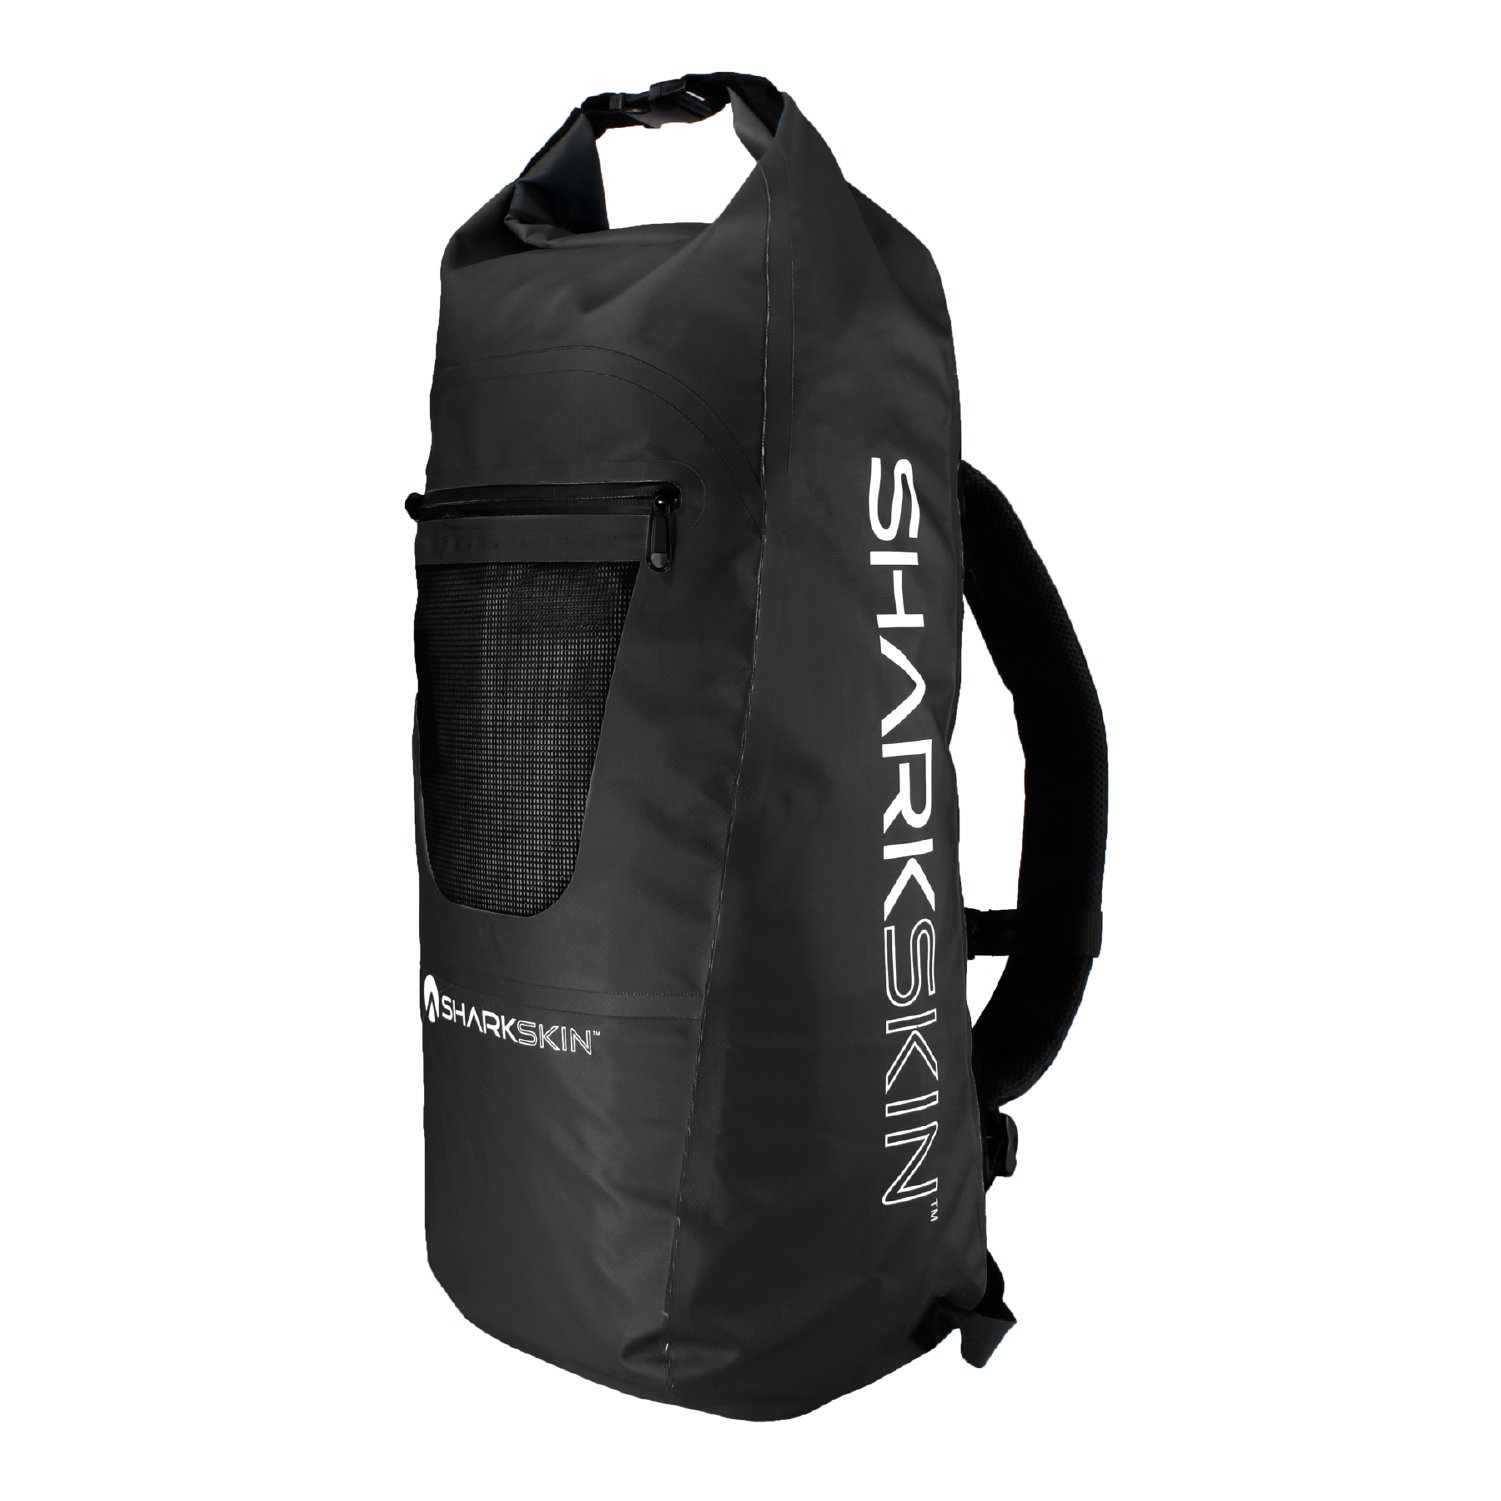 Sharkskin Performance Dry Backpack 30L